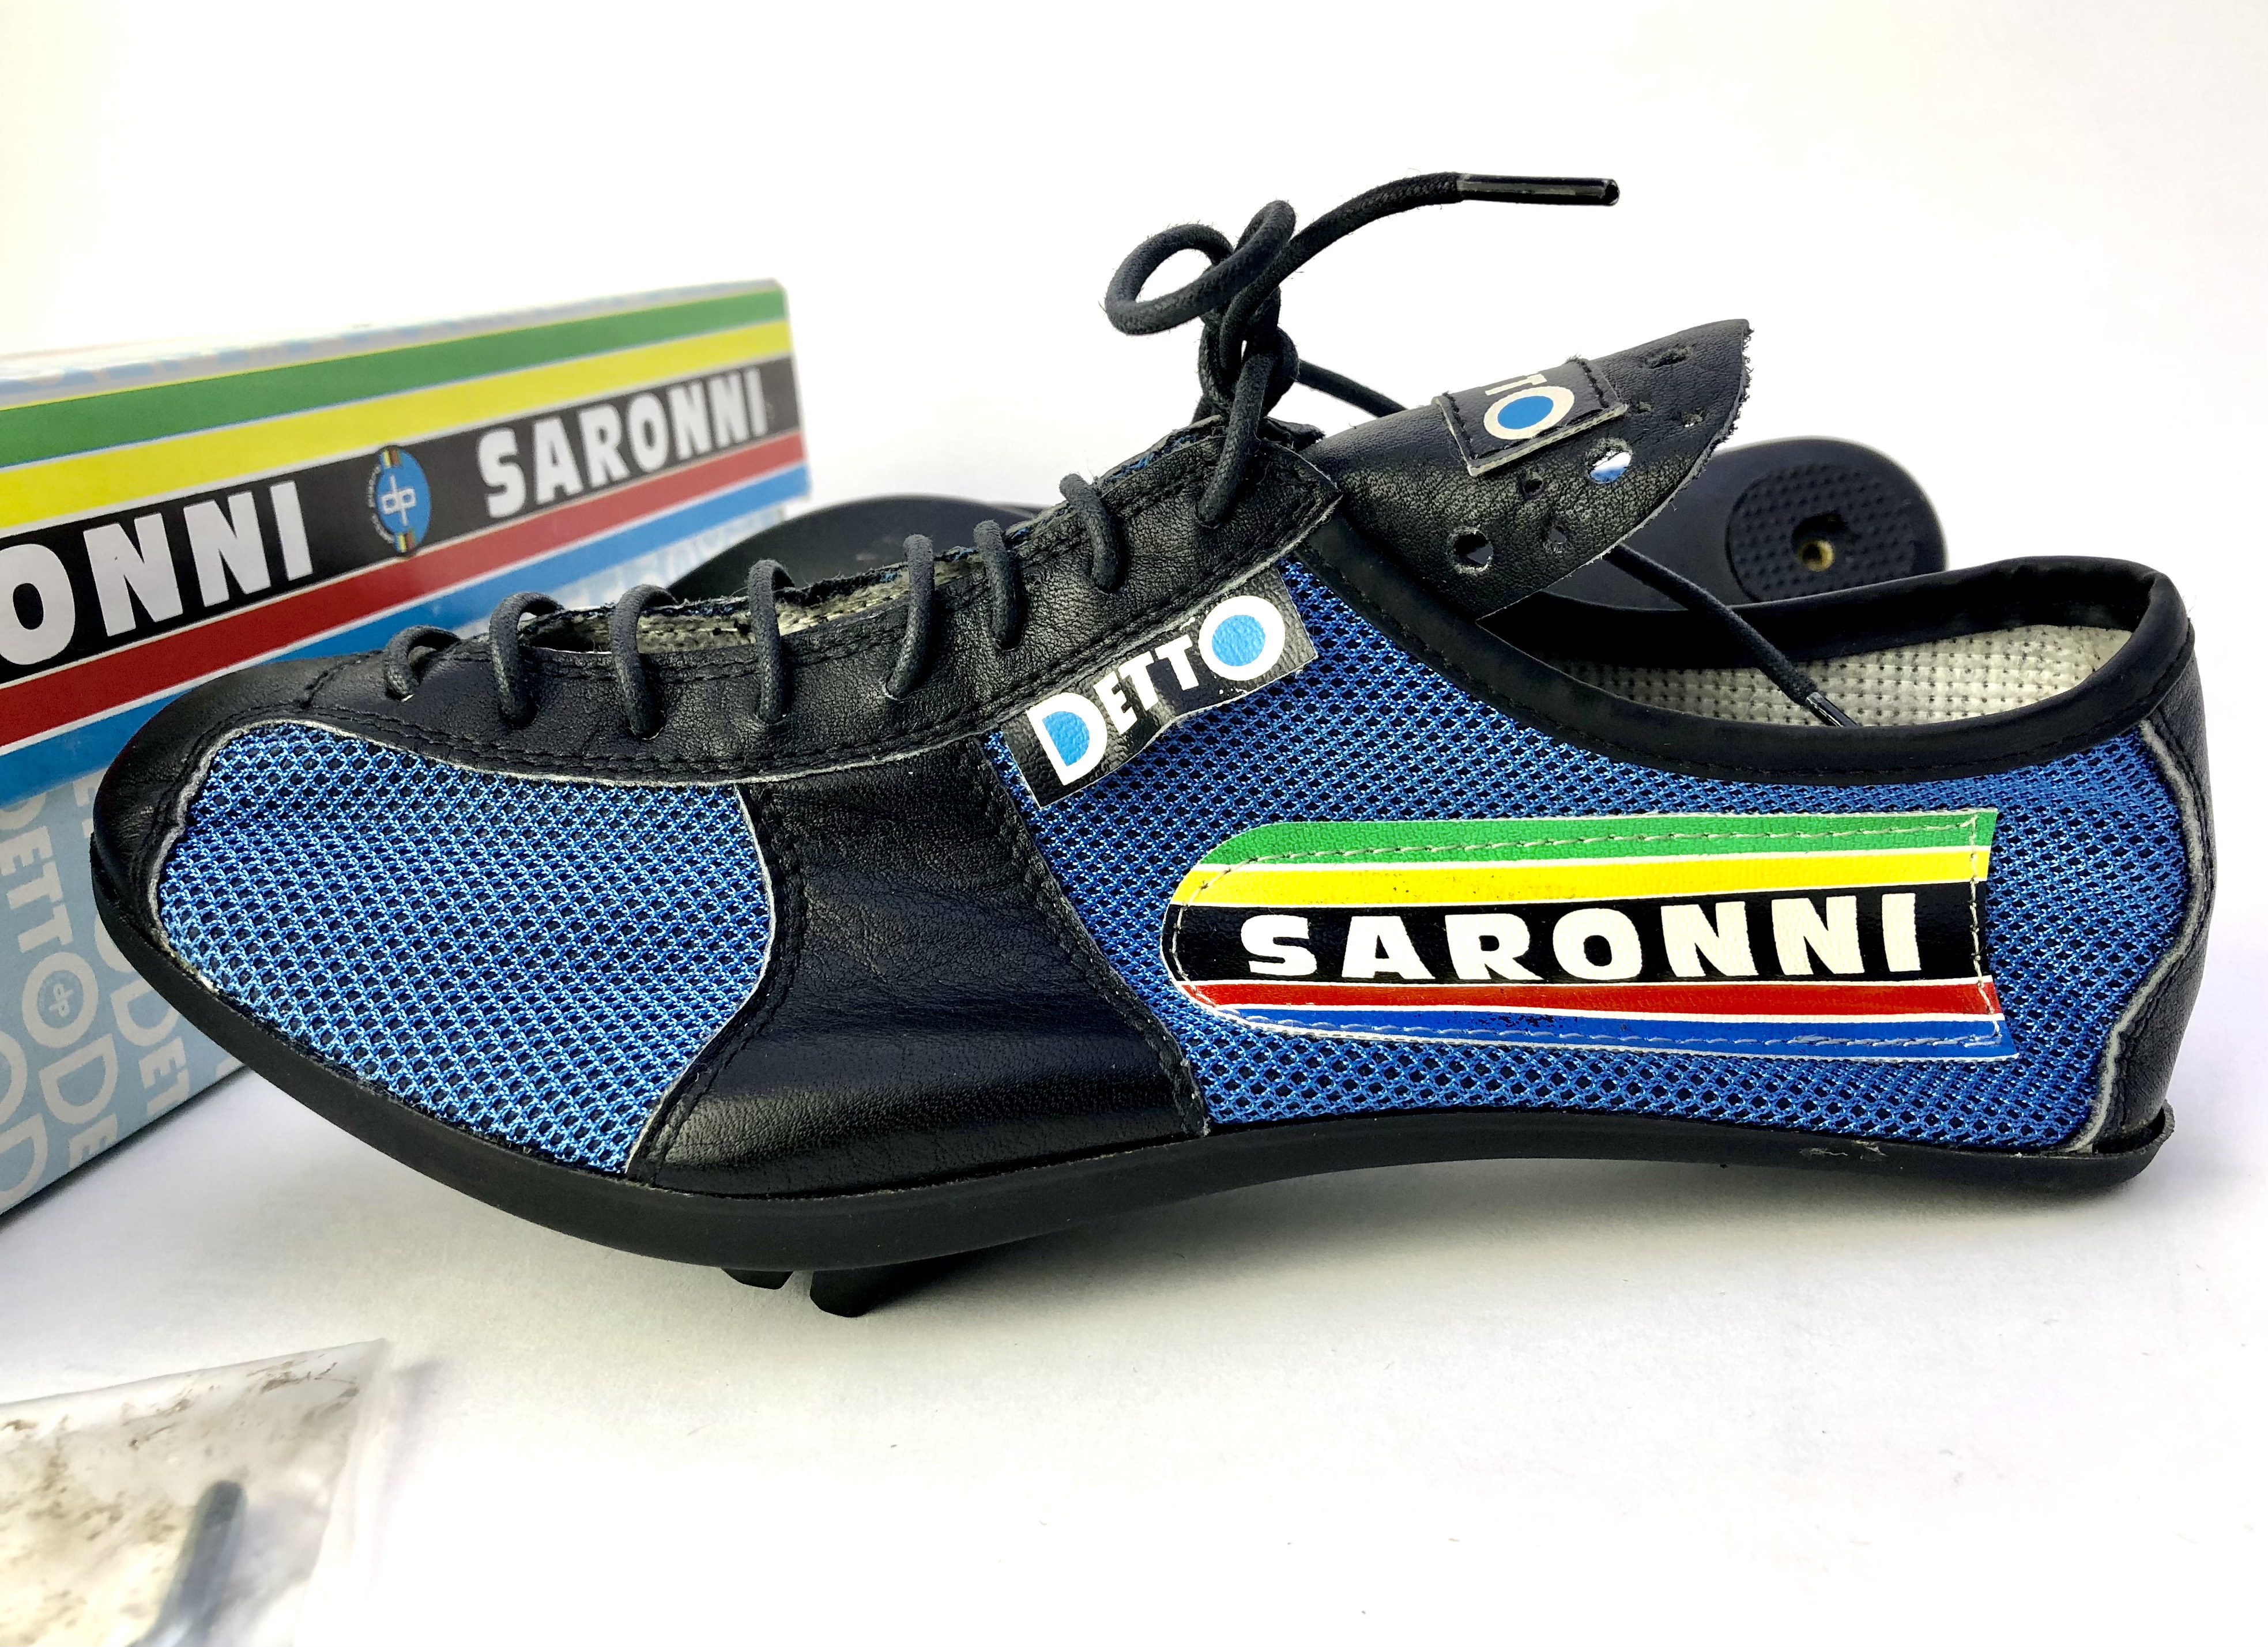 NOS Vintage Saronni di Detto Pietro Cycling Shoes Size 39